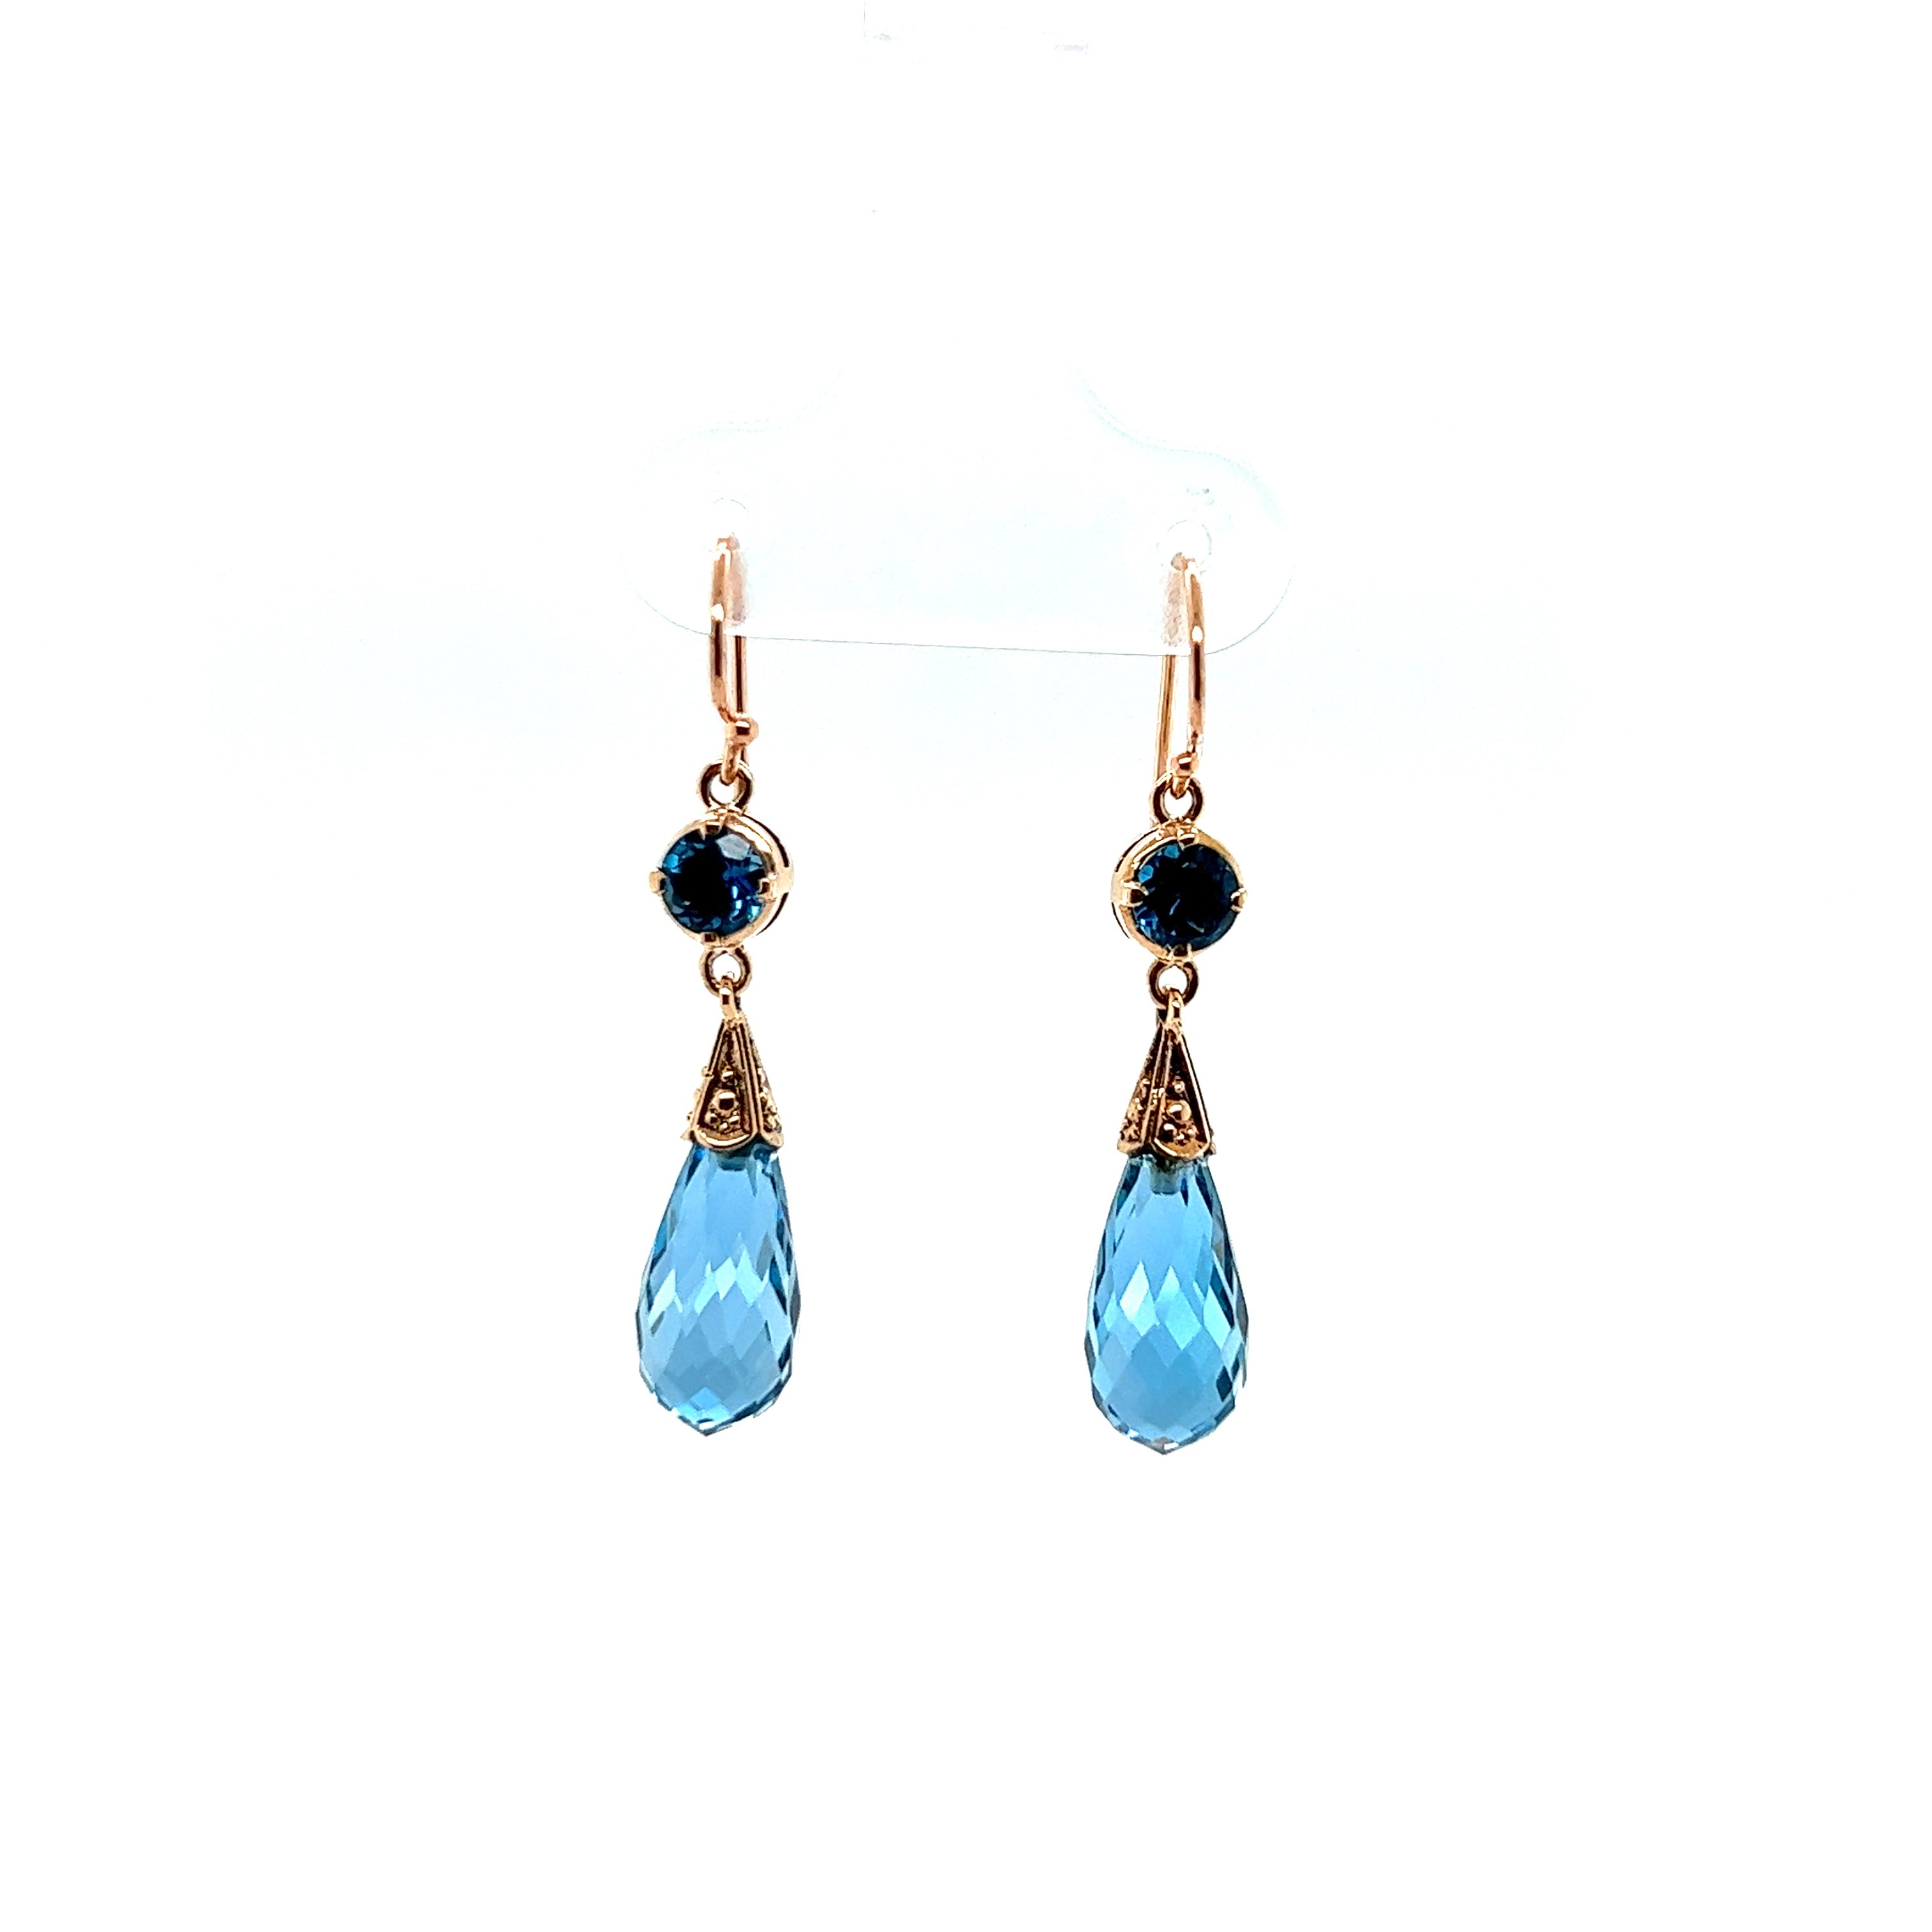 9ct rose gold briollette London blue topaz earrings.